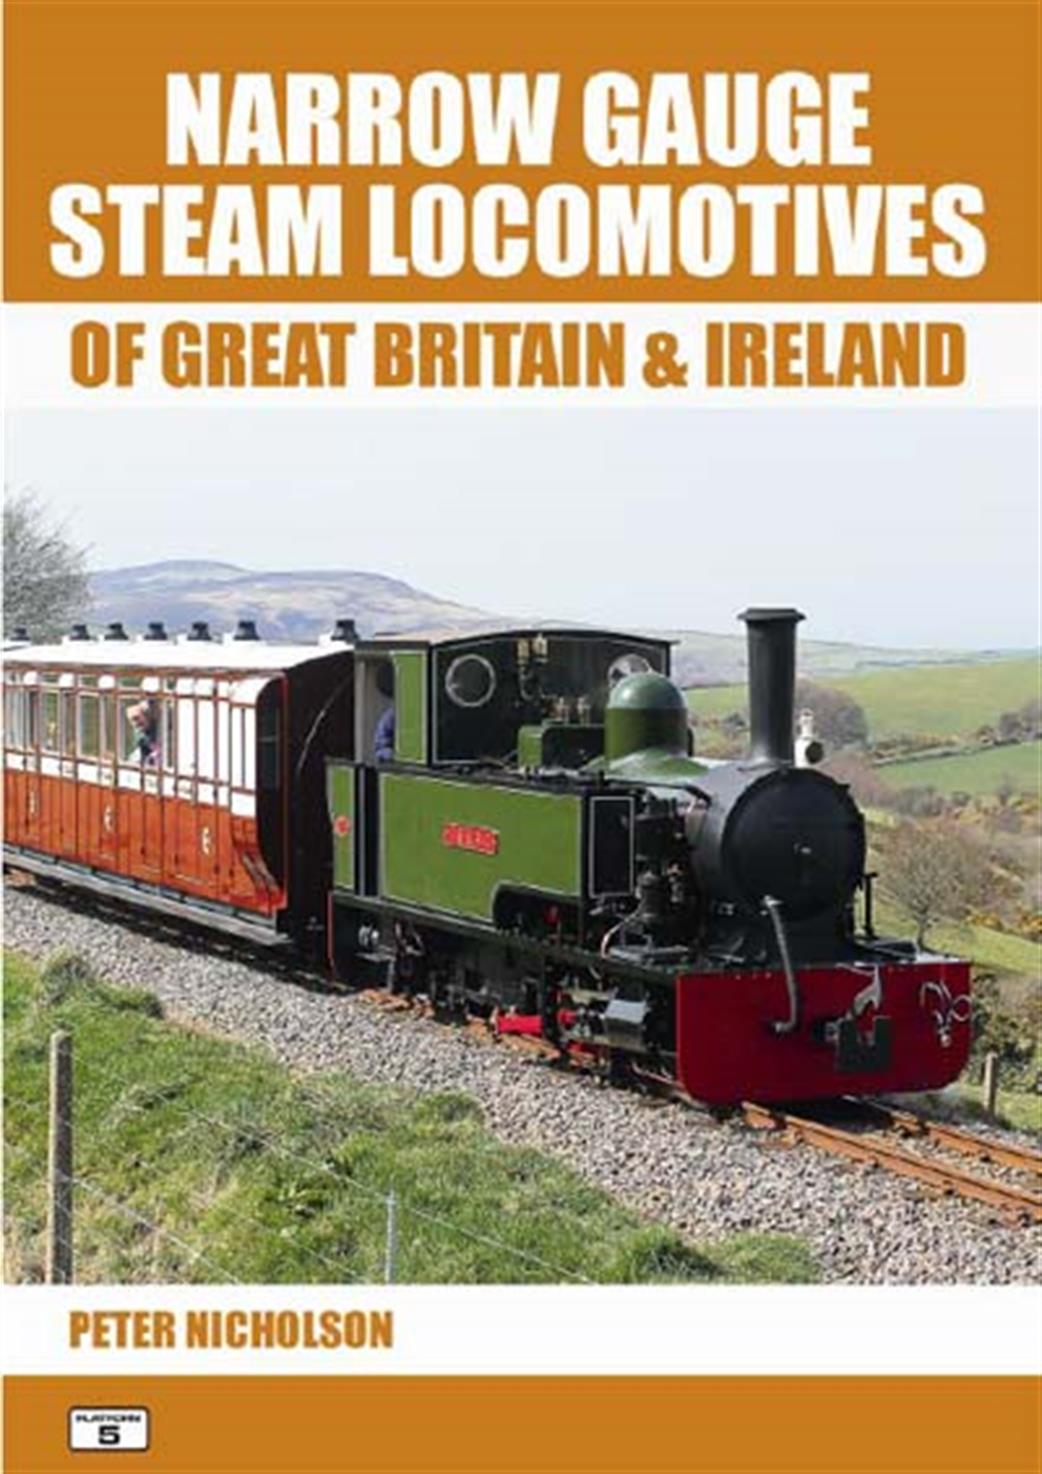 Platform 5 NGSL01 Narrow Gauge Steam Locomotives of Great Britain & Ireland by Peter Nicholson